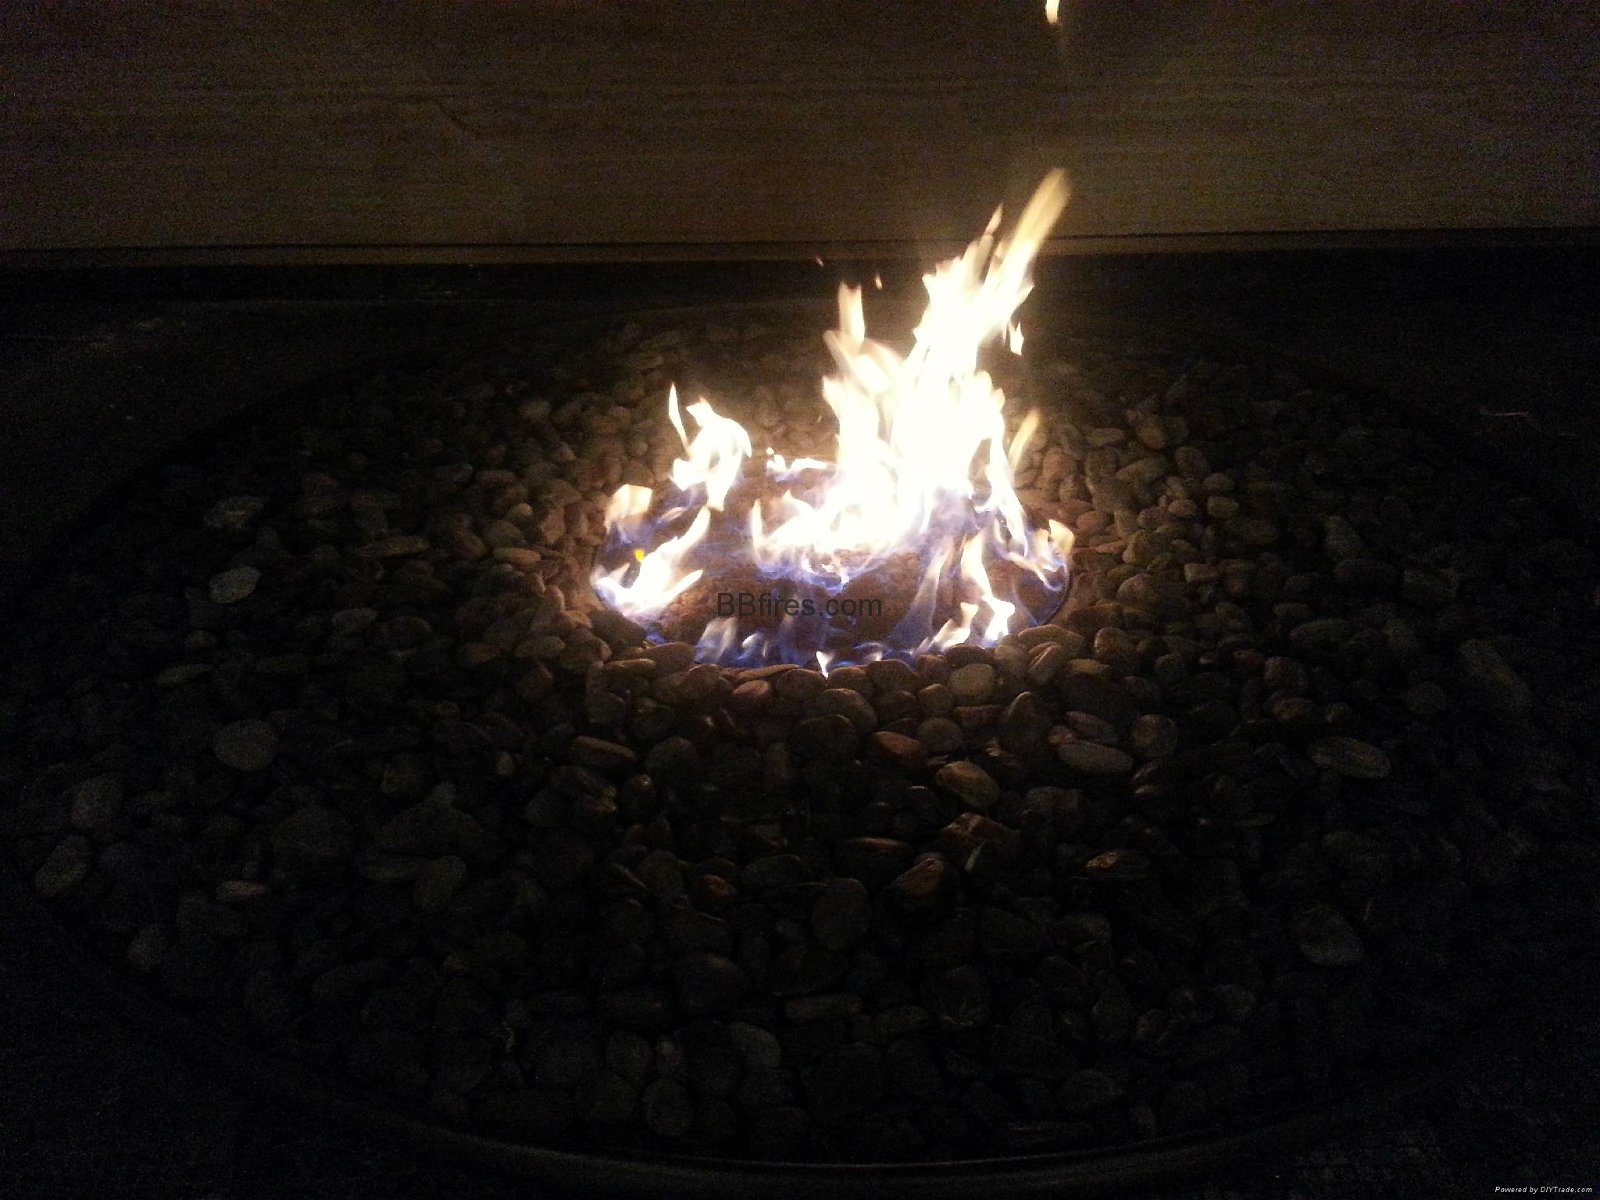 Outdoor bio ethenol fire Bowl